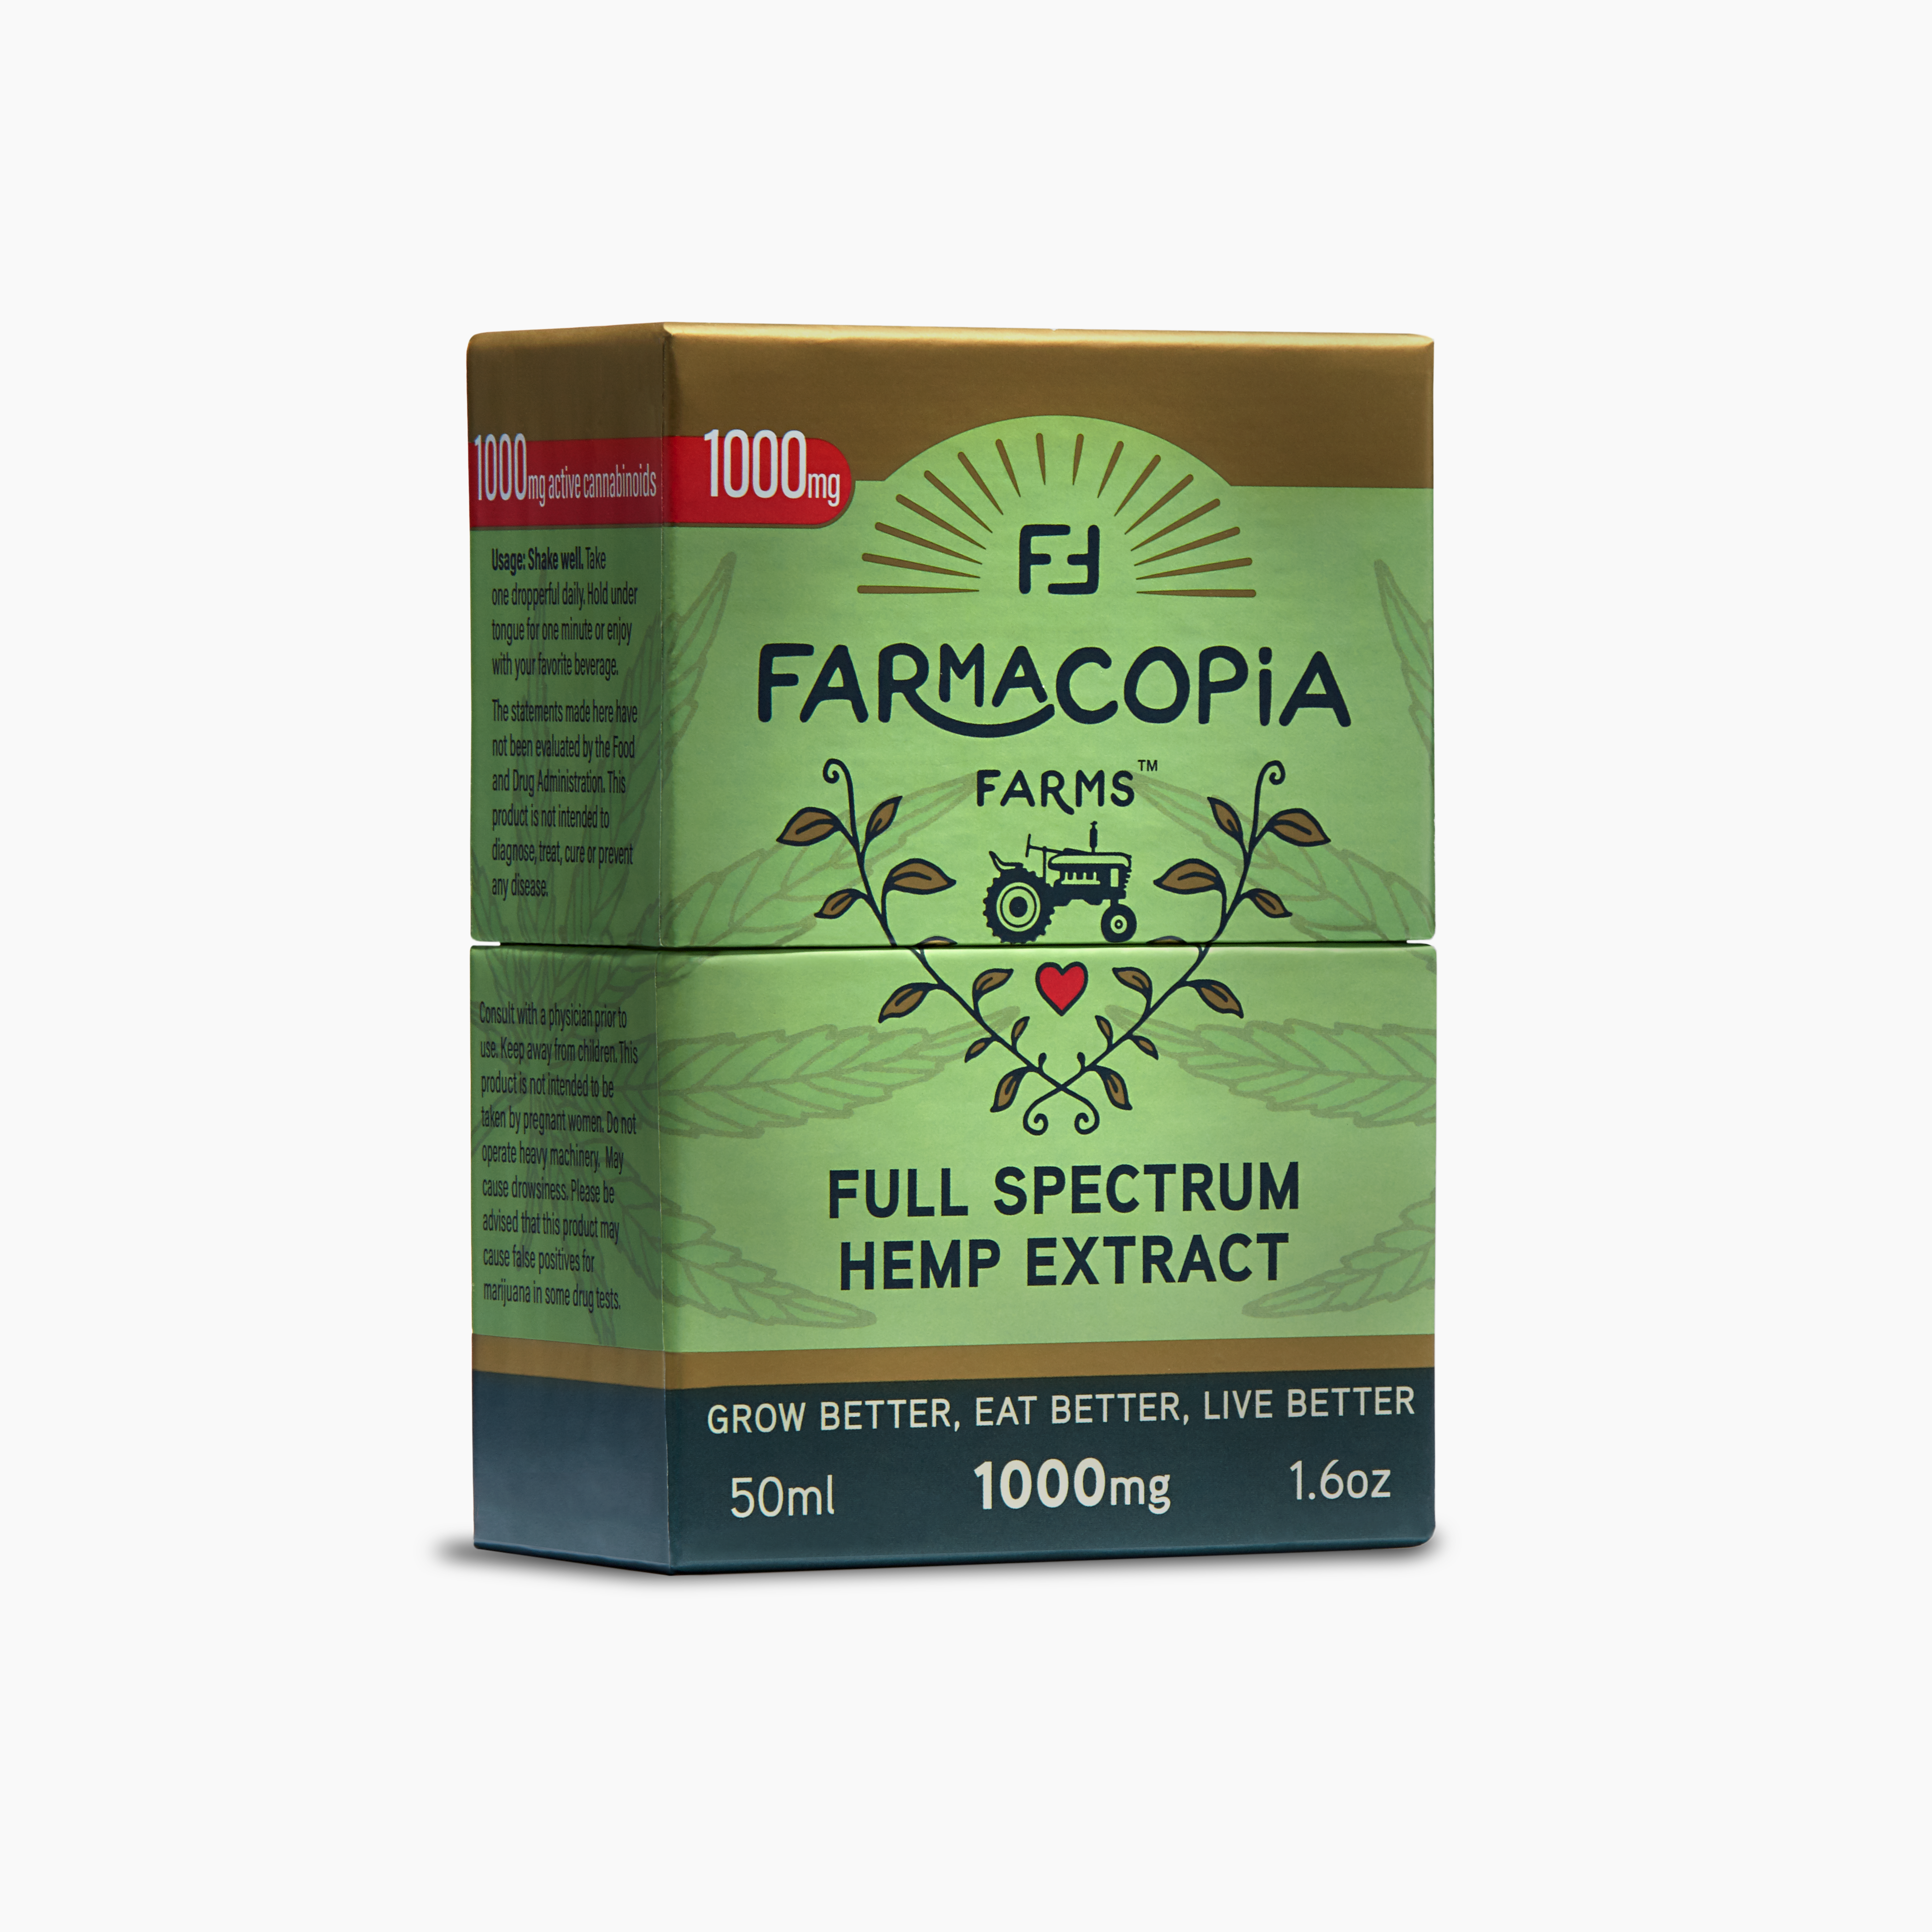 Farmacopia Farms Full Spectrum Hemp Extract, 1000mg